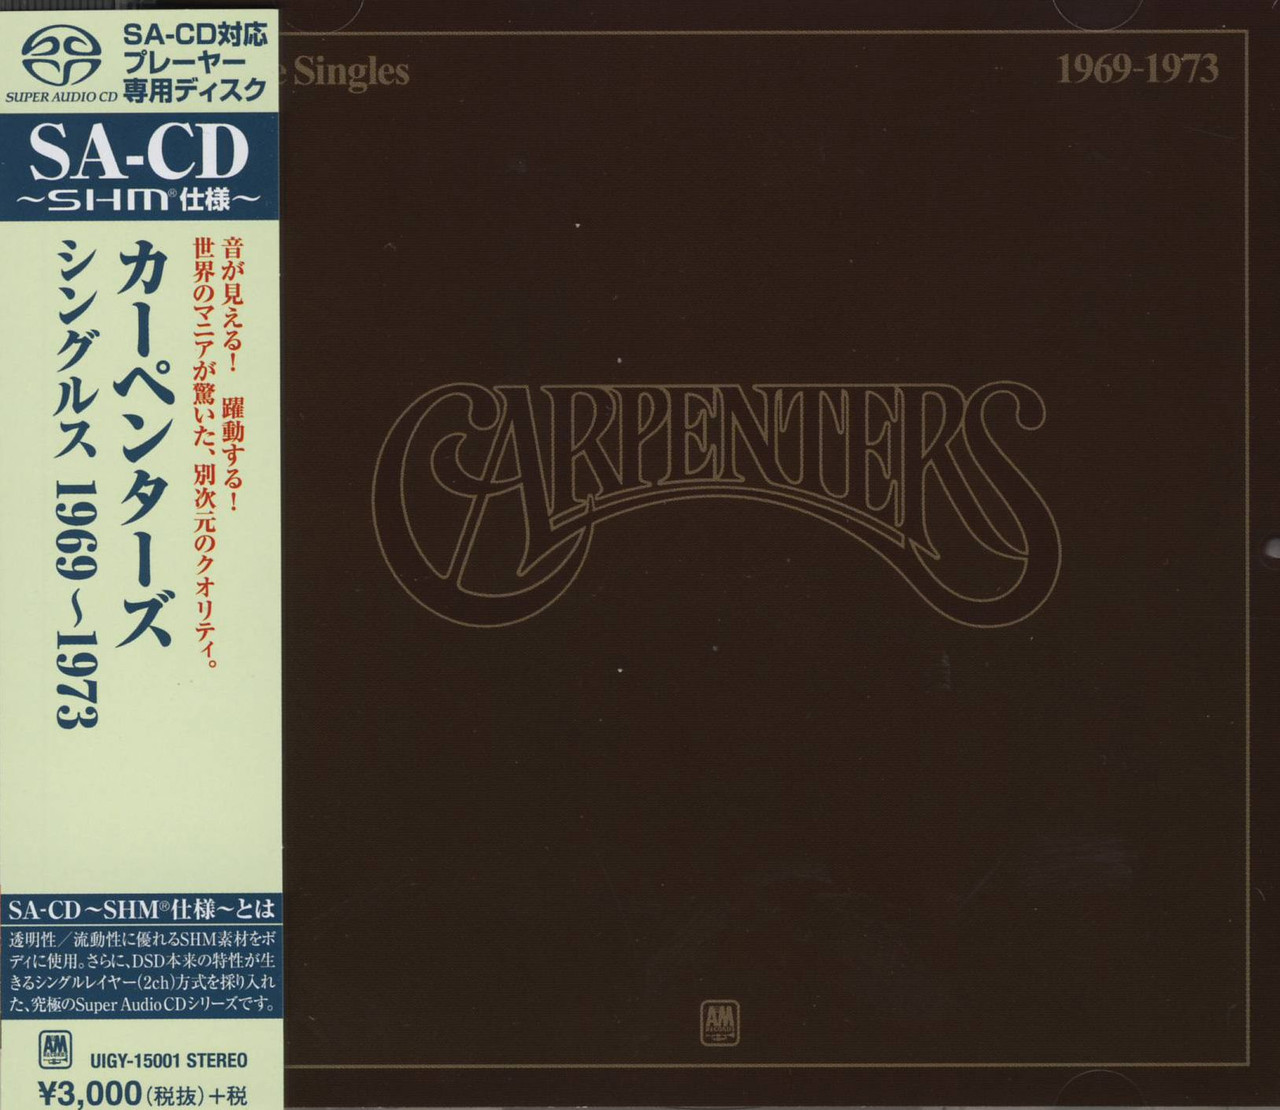 Carpenters: Singles 1969-1973 - Single Layer SHM SACD, Limited, Remastered